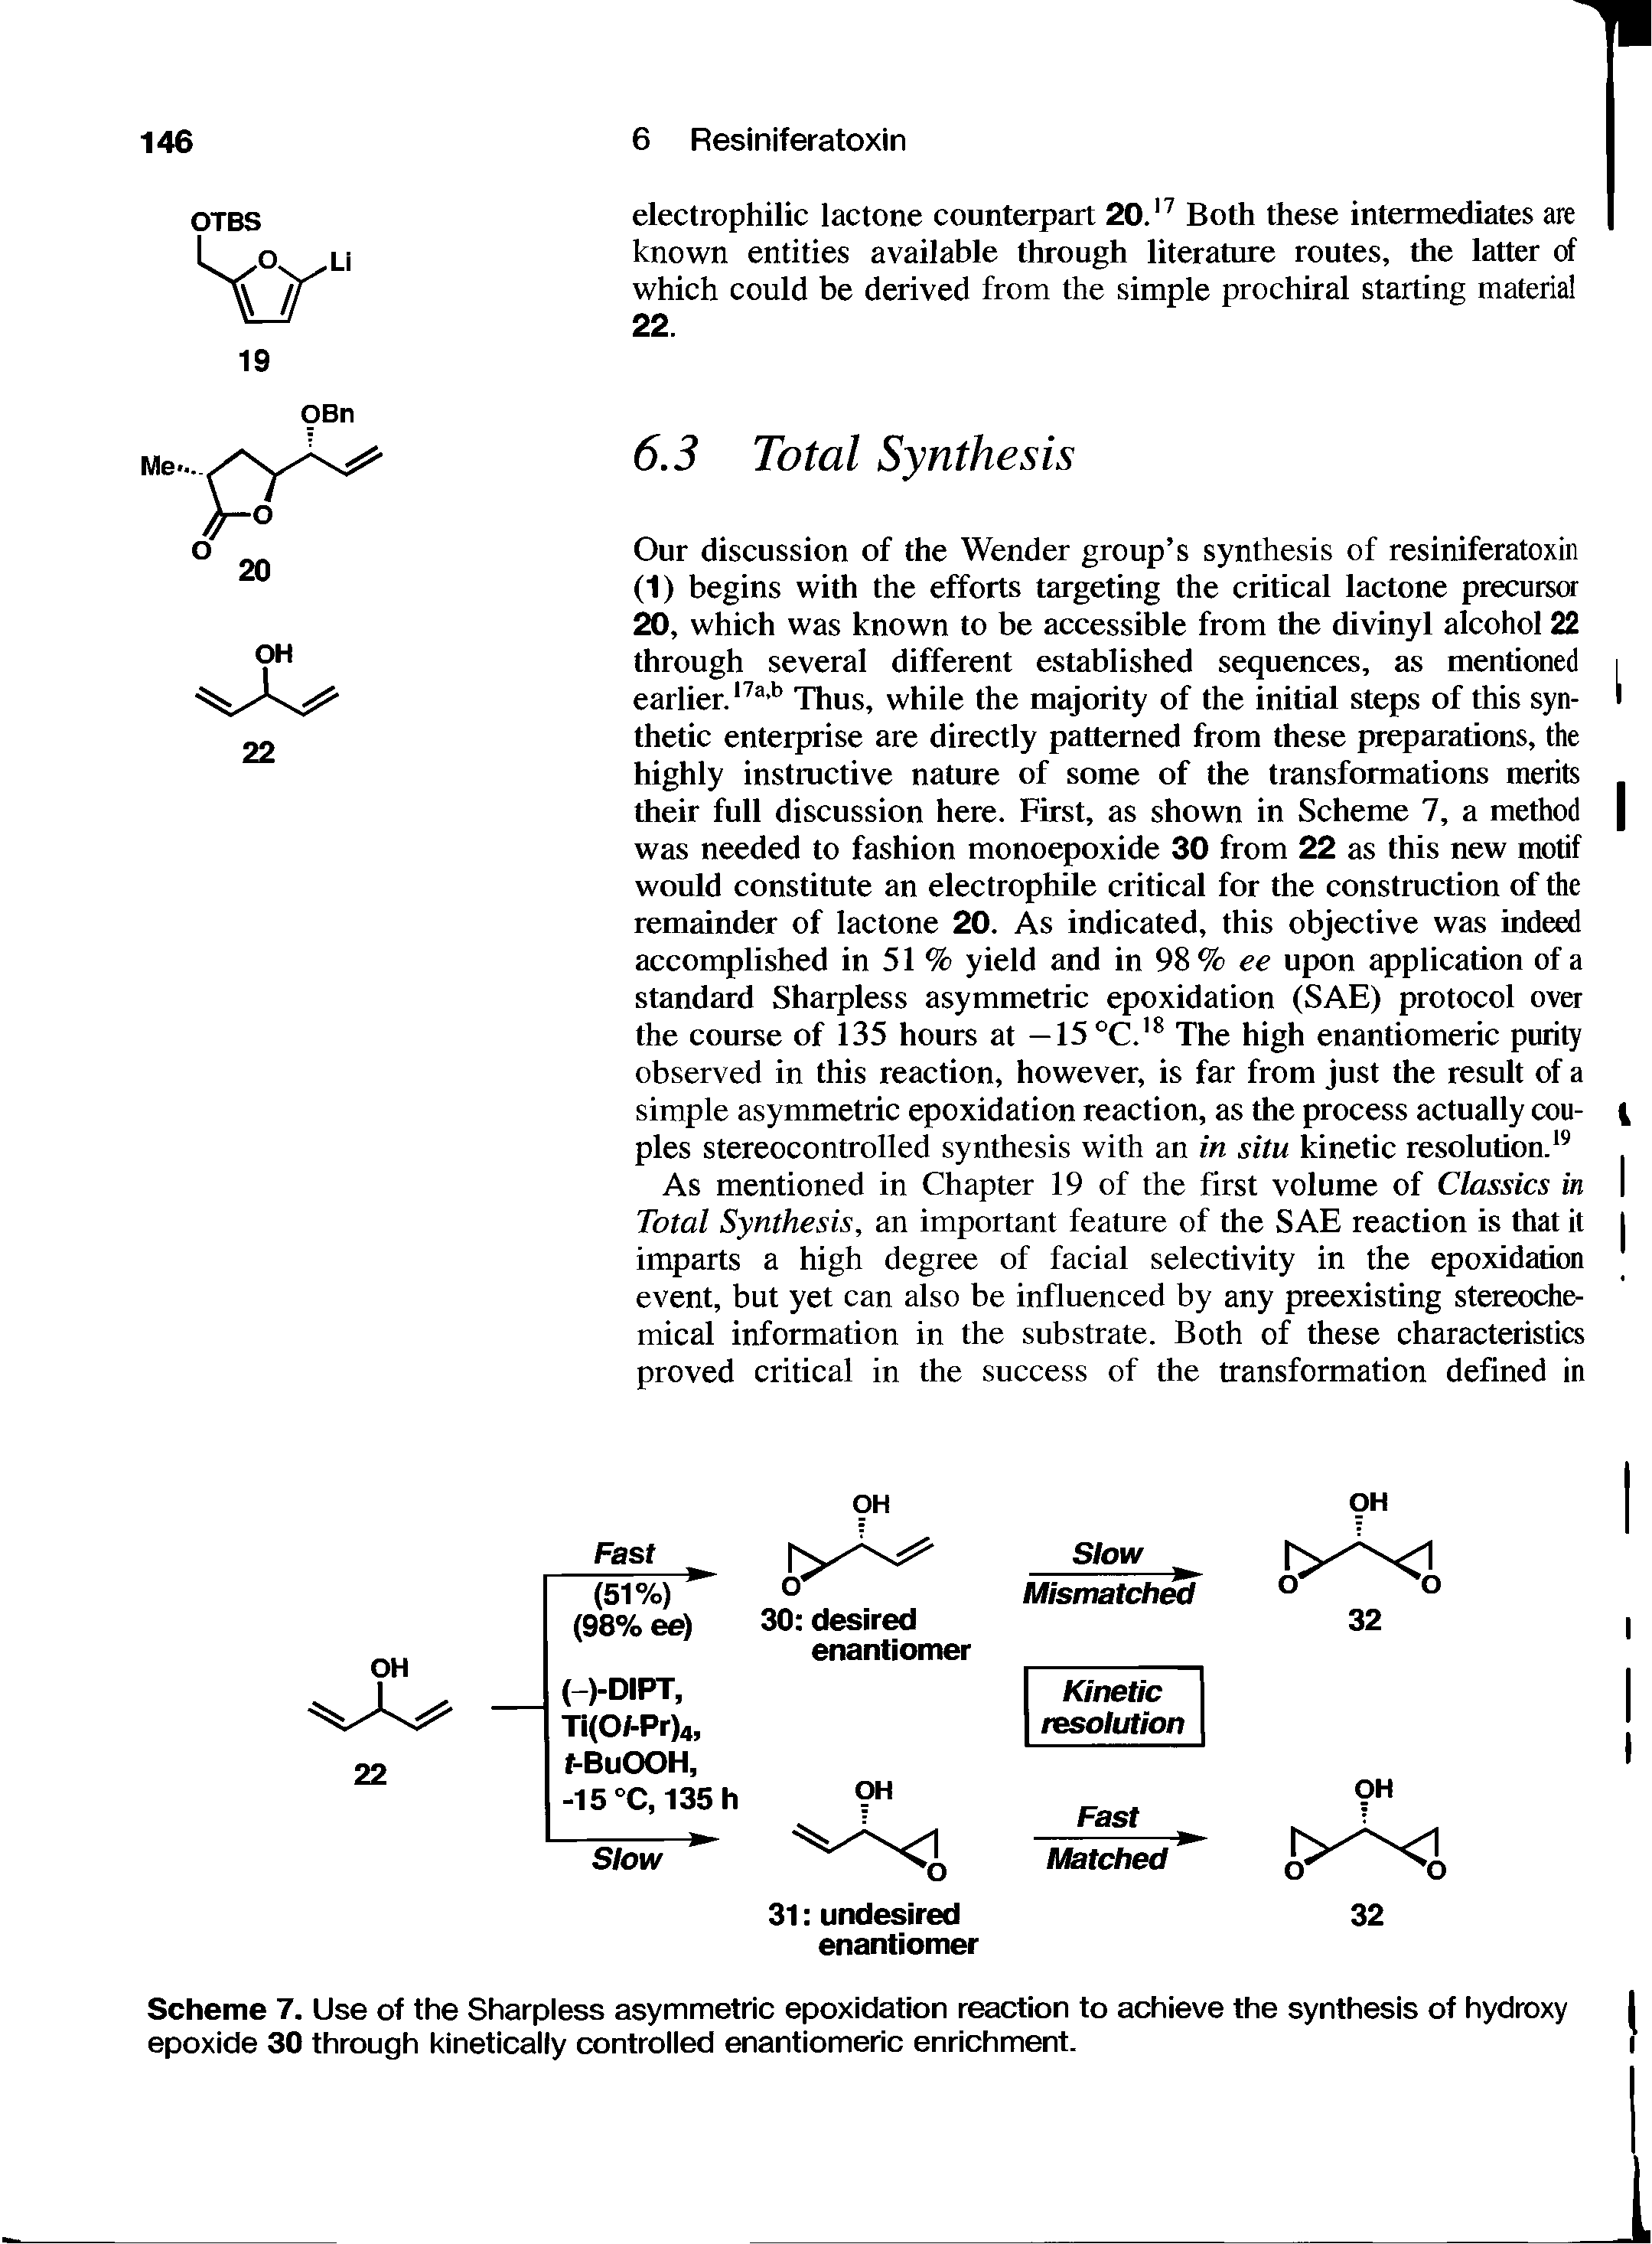 Scheme 7, Use of the Sharpless asymmetric epoxidation reaction to achieve the synthesis of hydroxy epoxide 30 through kinetically controlled enantiomeric enrichment.